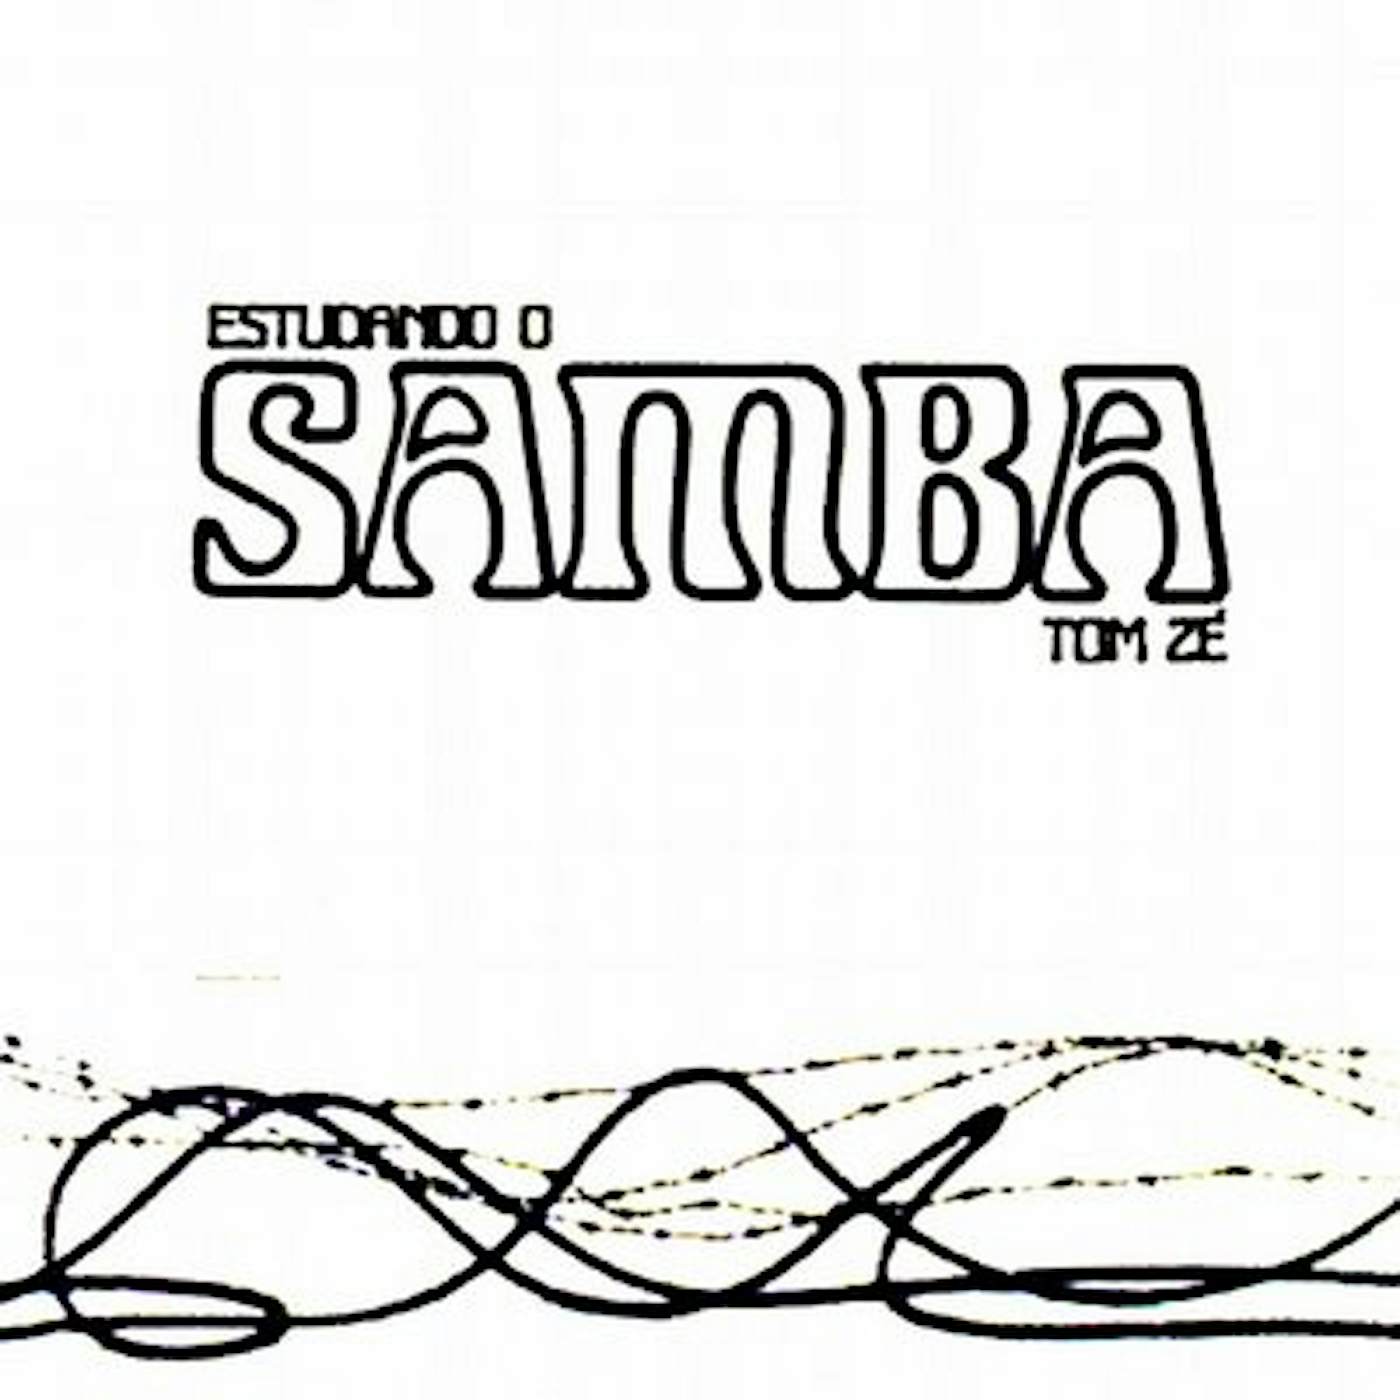 Tom Zé Estudando o samba Vinyl Record